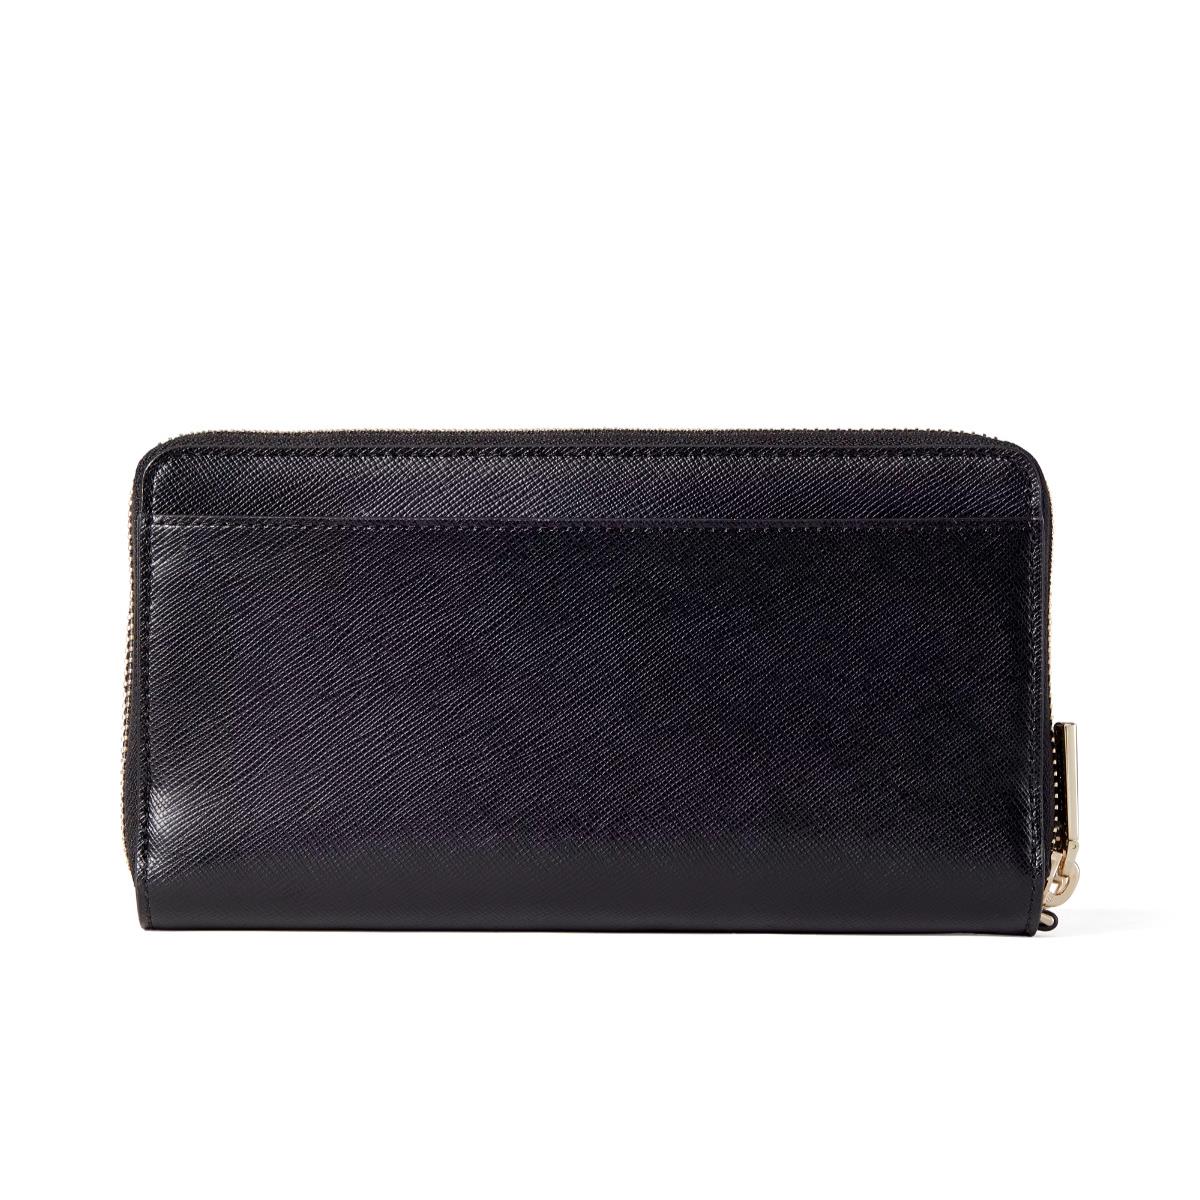 New Kate Spade Staci Large Carryall Wristlet Wallet Leather Black